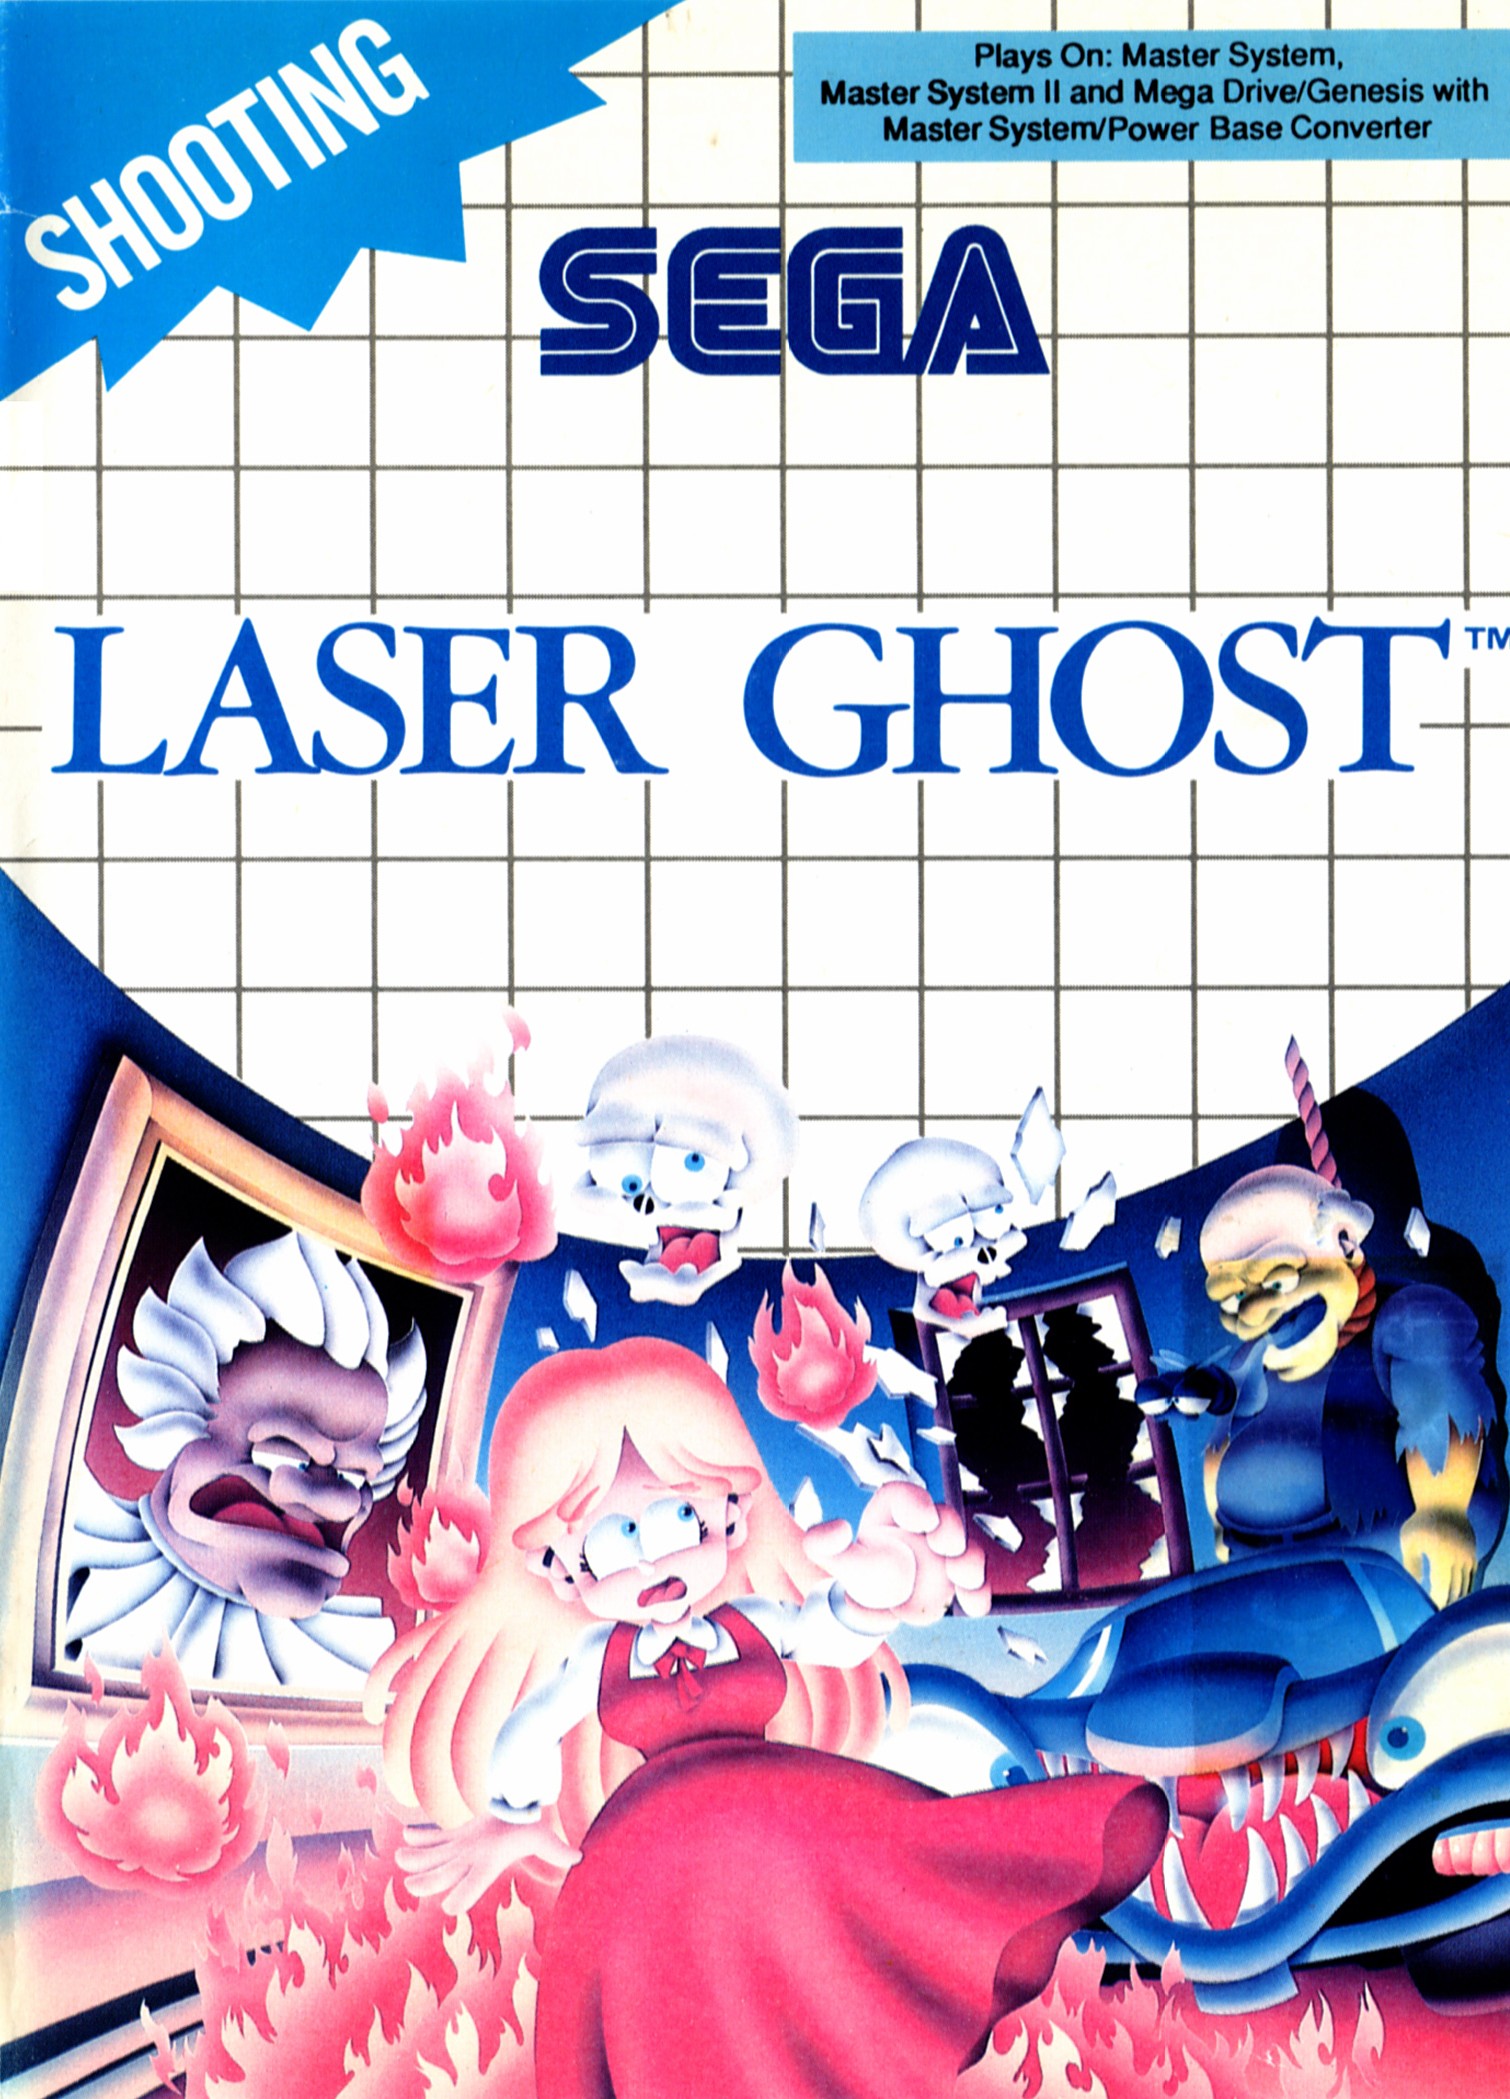 'Laser Ghost'